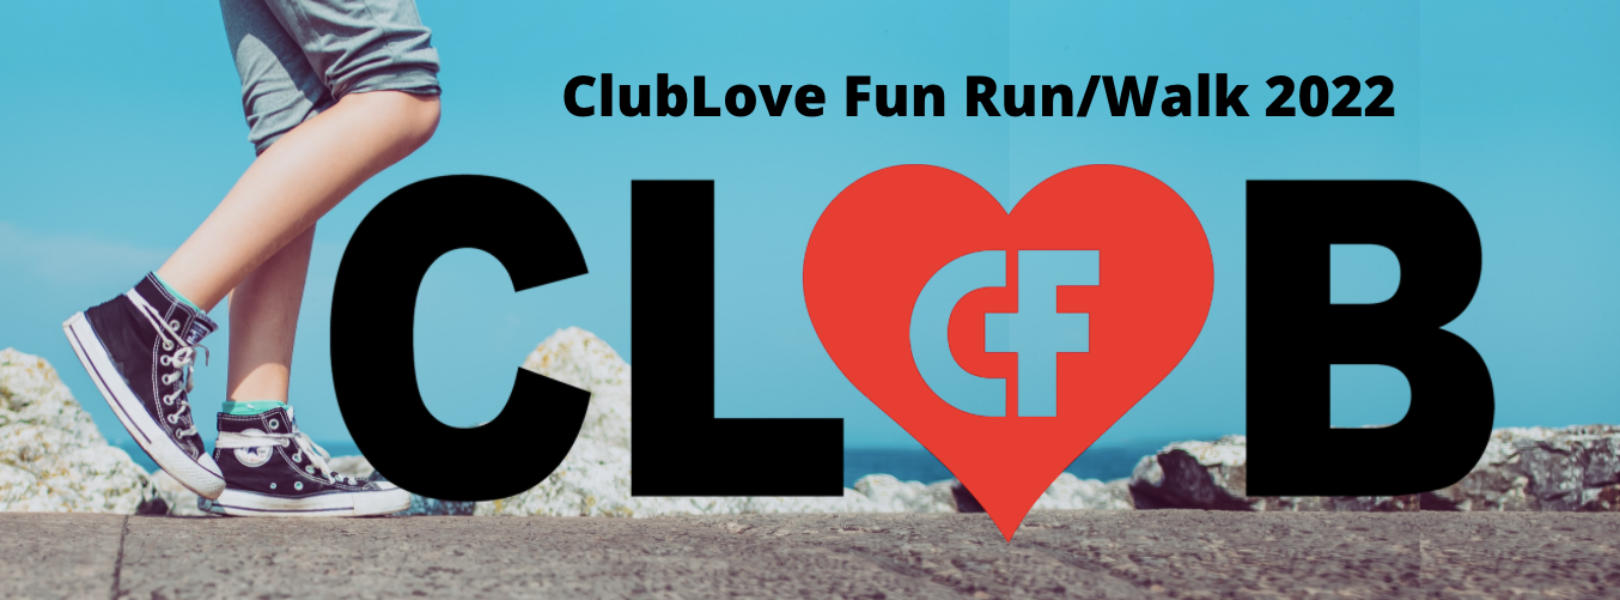 Club Love Fun Run/Walk '22